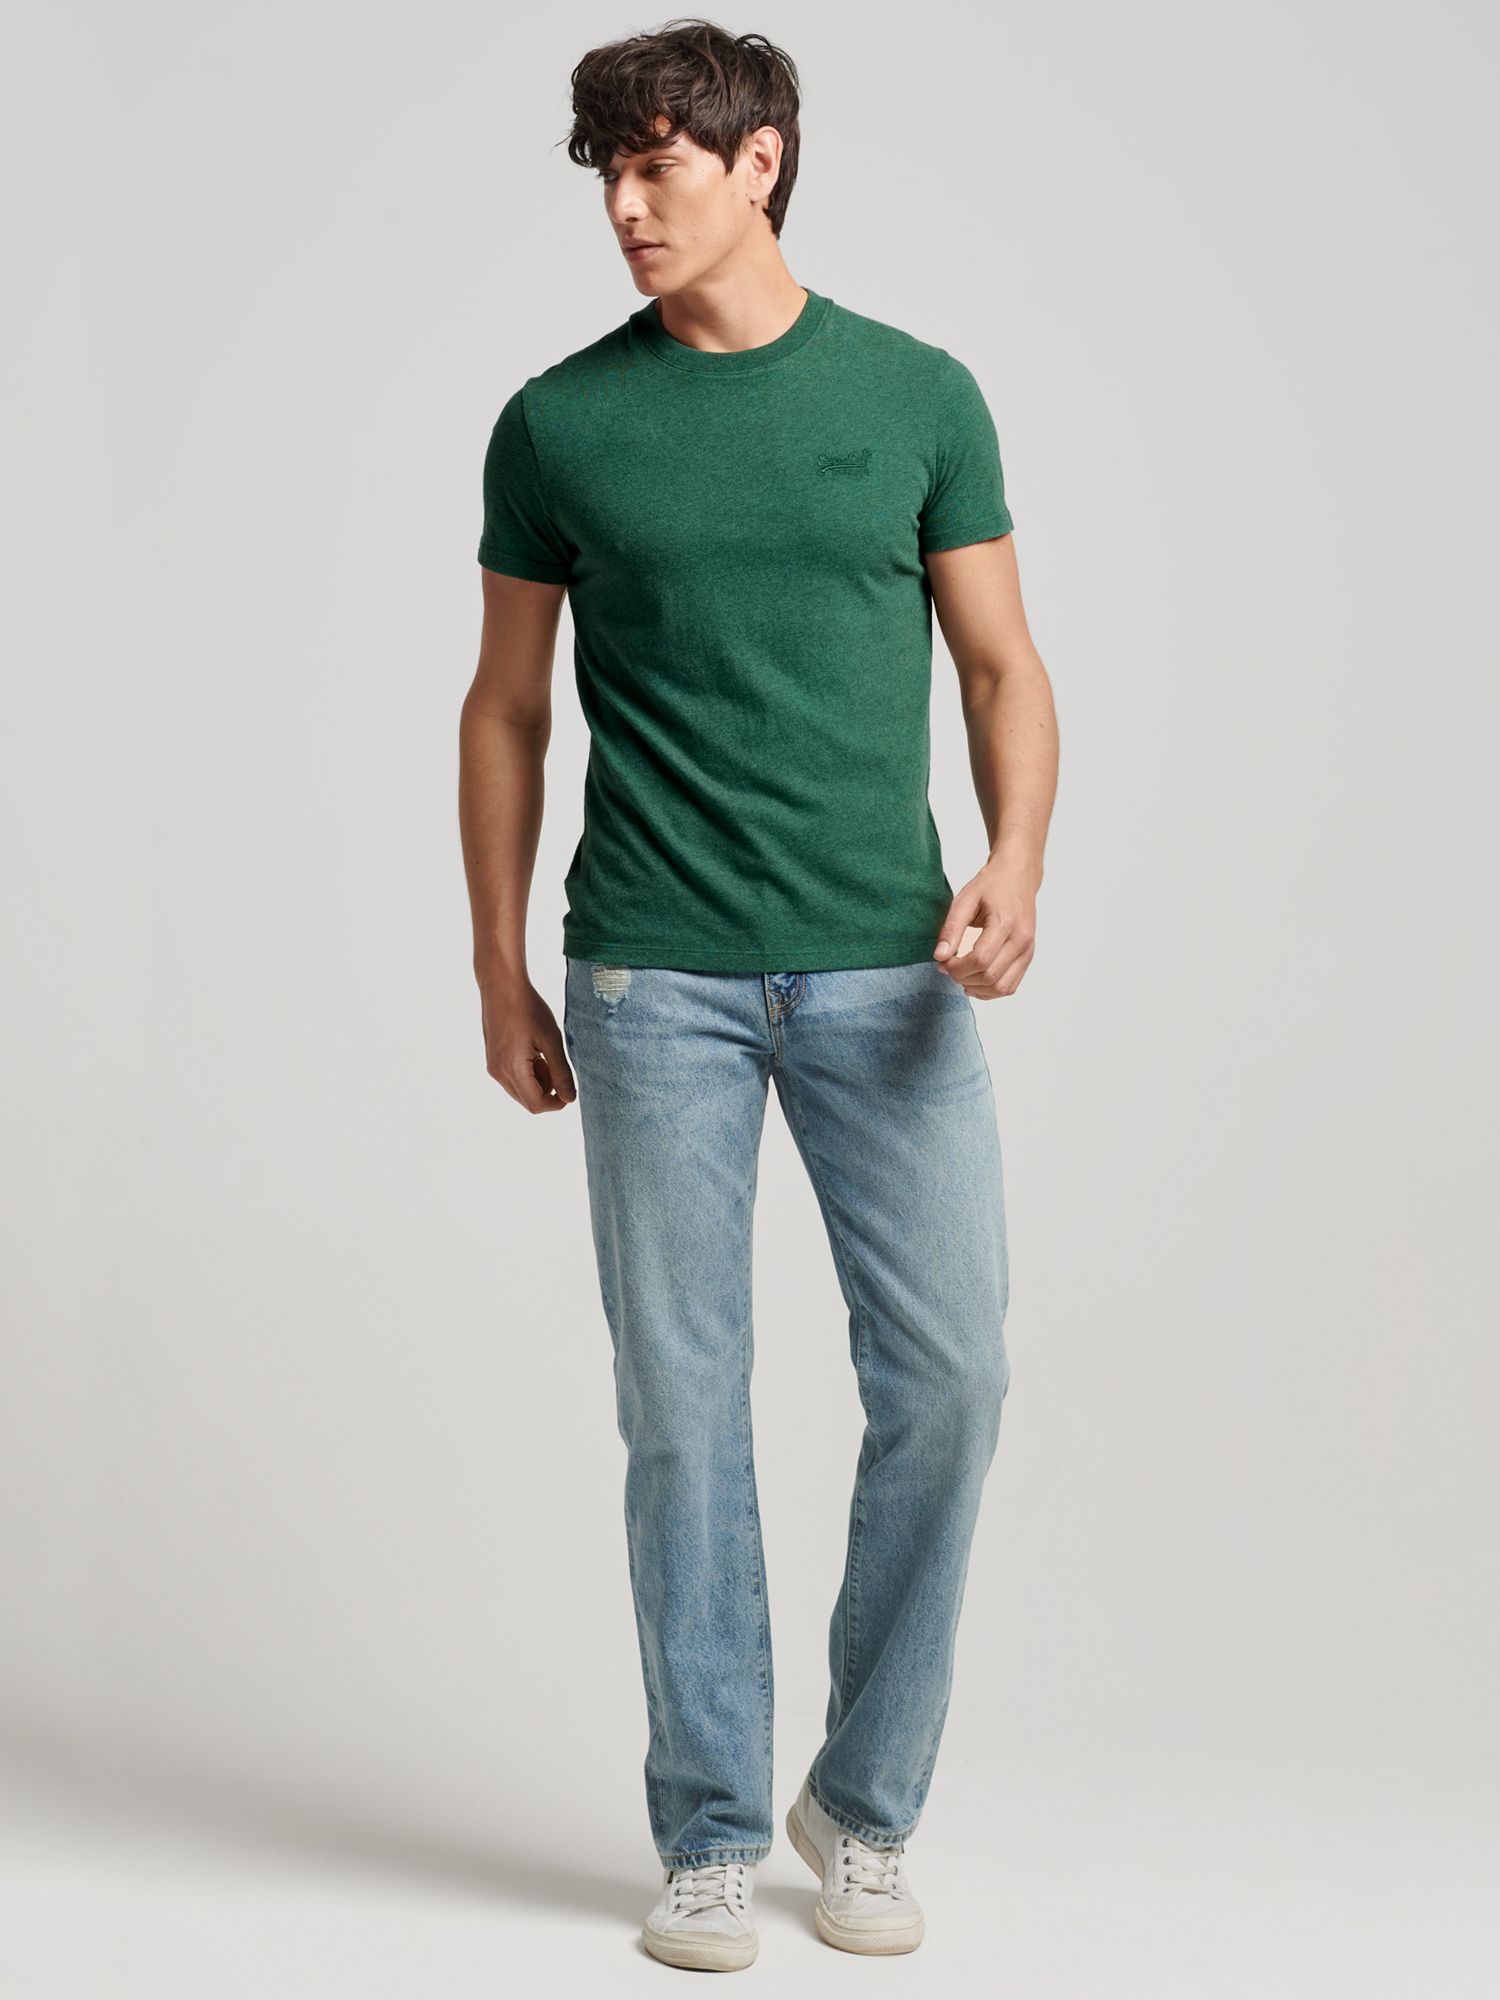 Men's Organic Cotton Essential Logo T-Shirt in Heritage Pine Green Marl